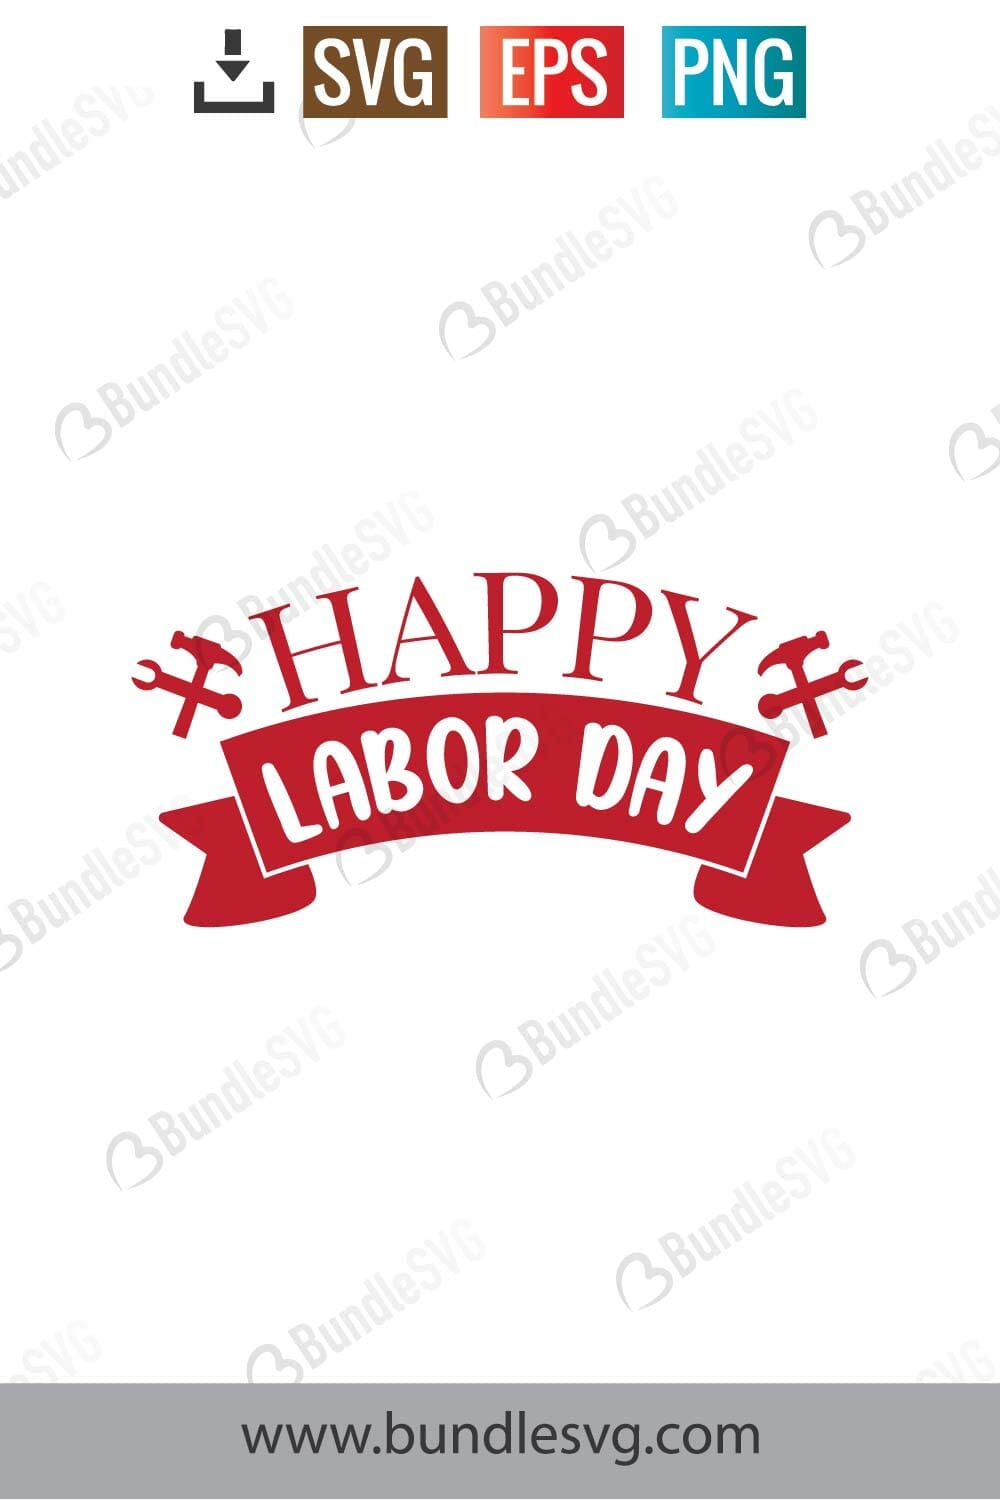 Happy Labor Day SVG Cut Files Free Download | BundleSVG.com